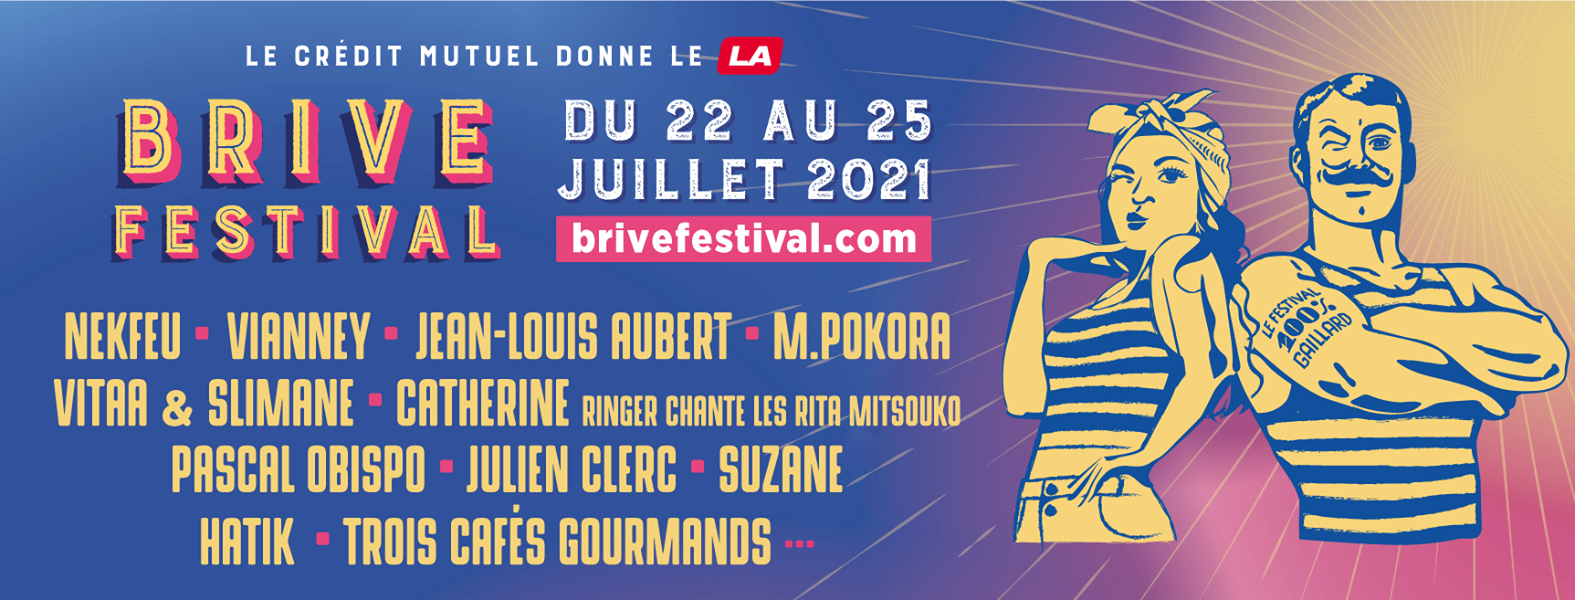 Brive festival 2021